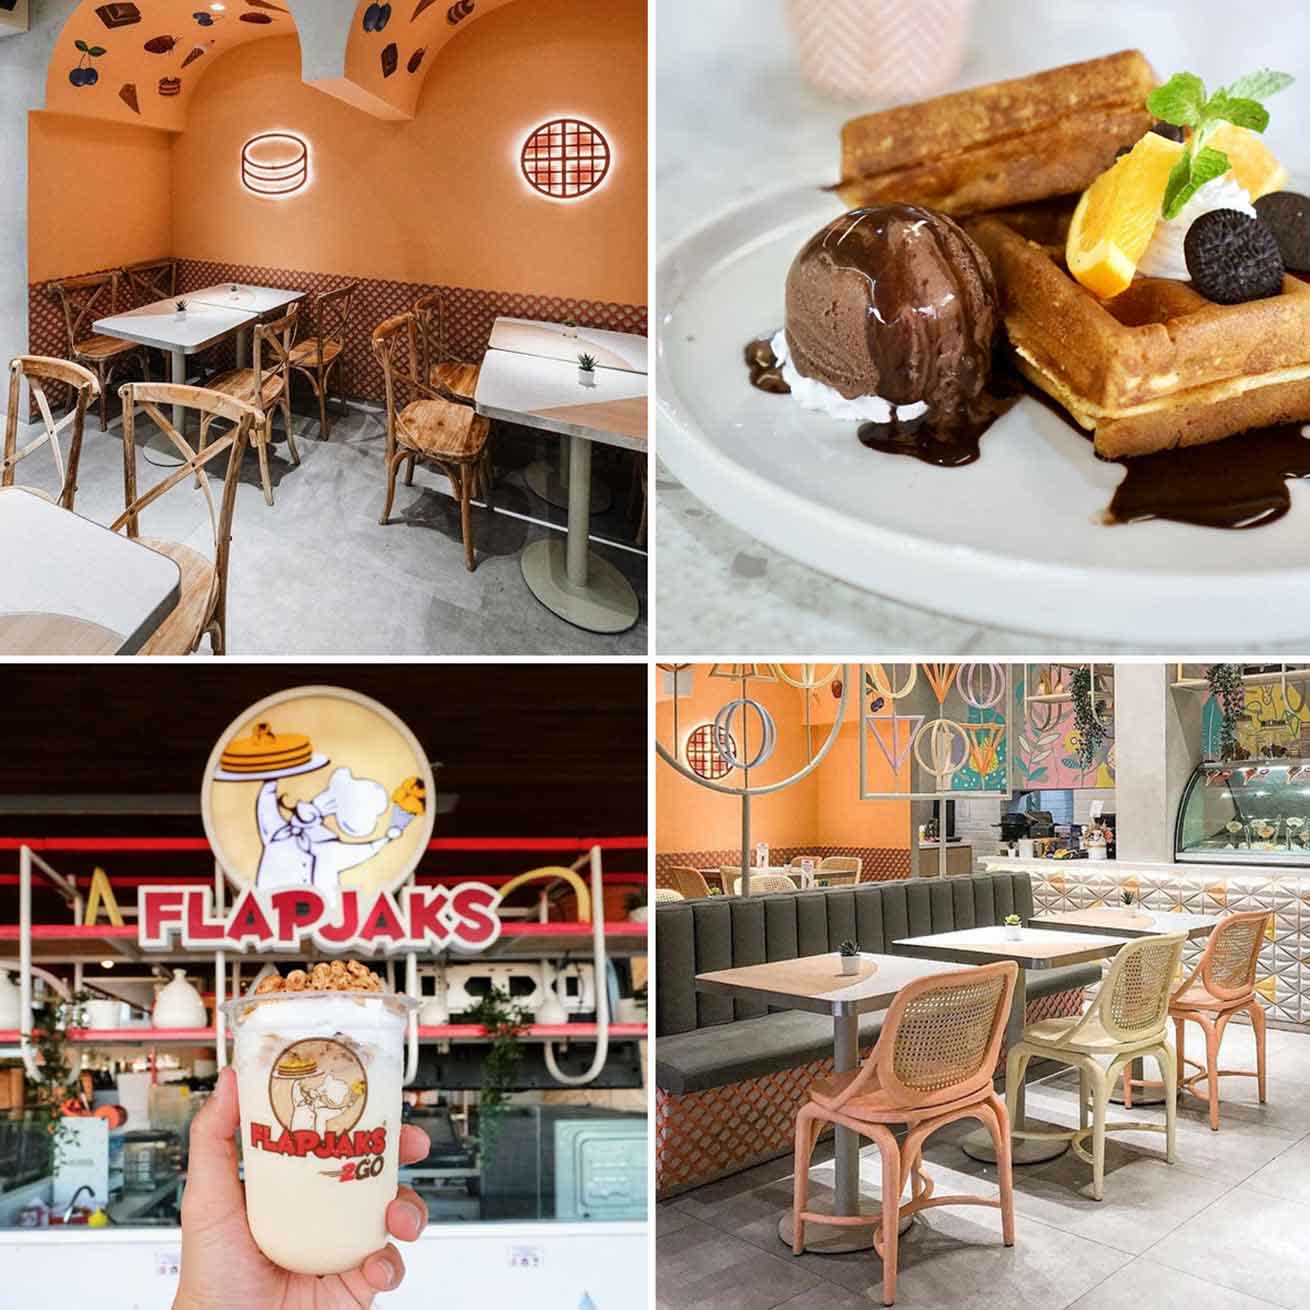 Flapjacks cafe - interior and desserts